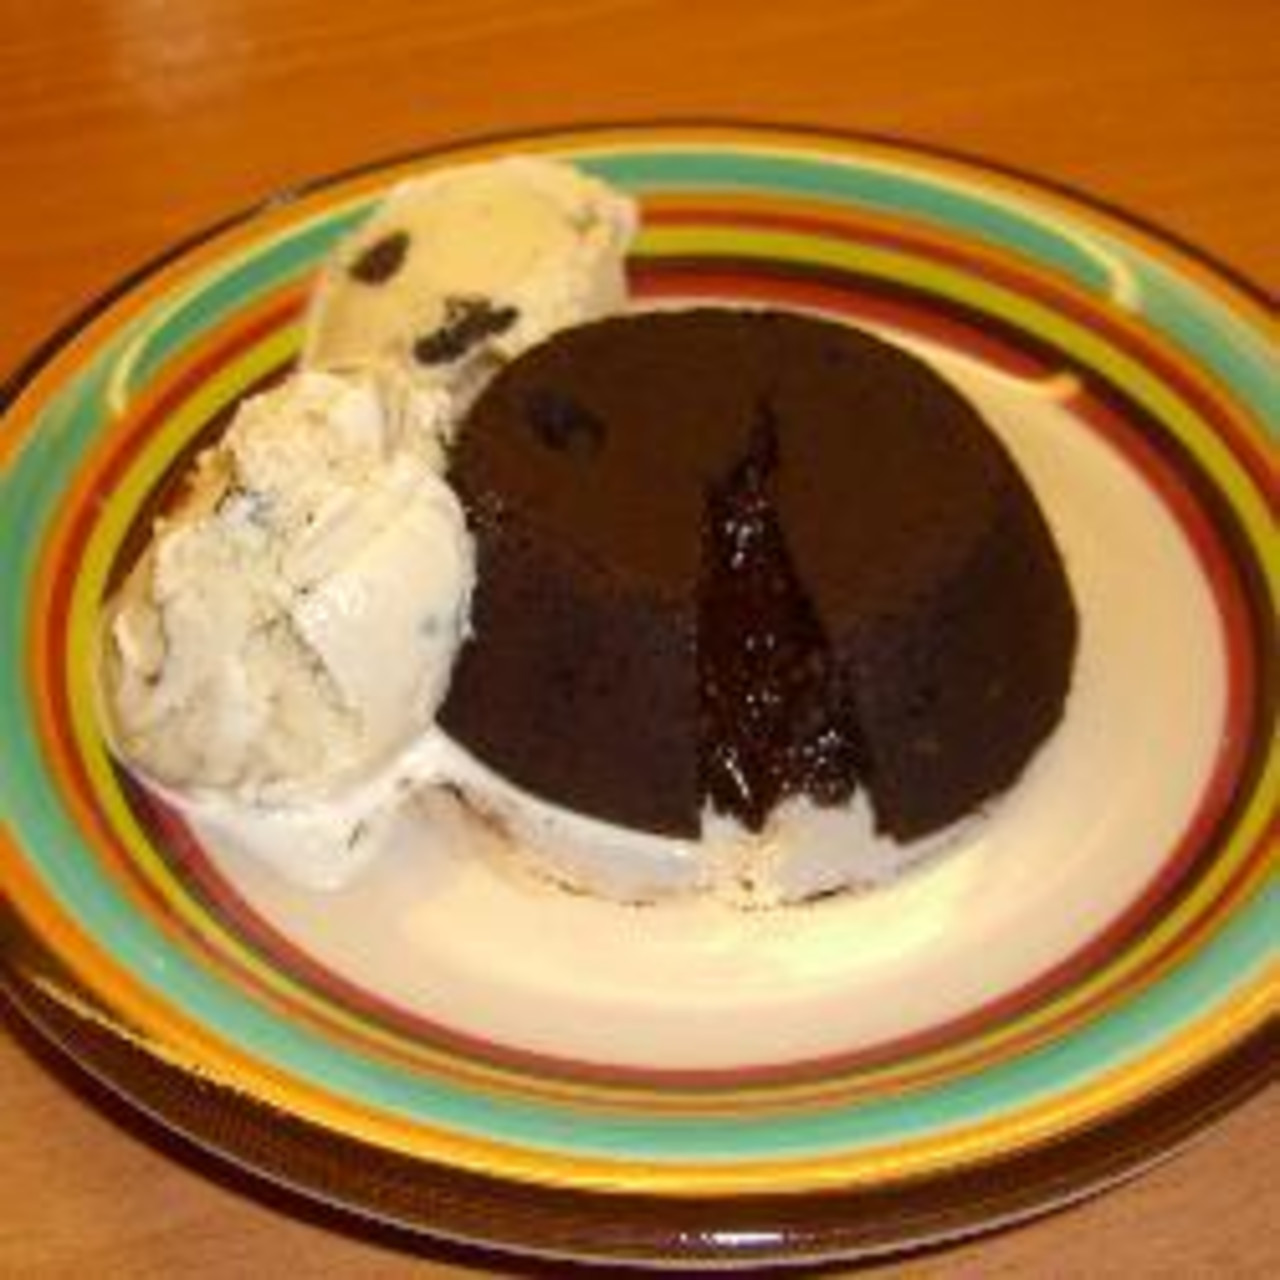 Melting Chocolate Puddings, Recipes